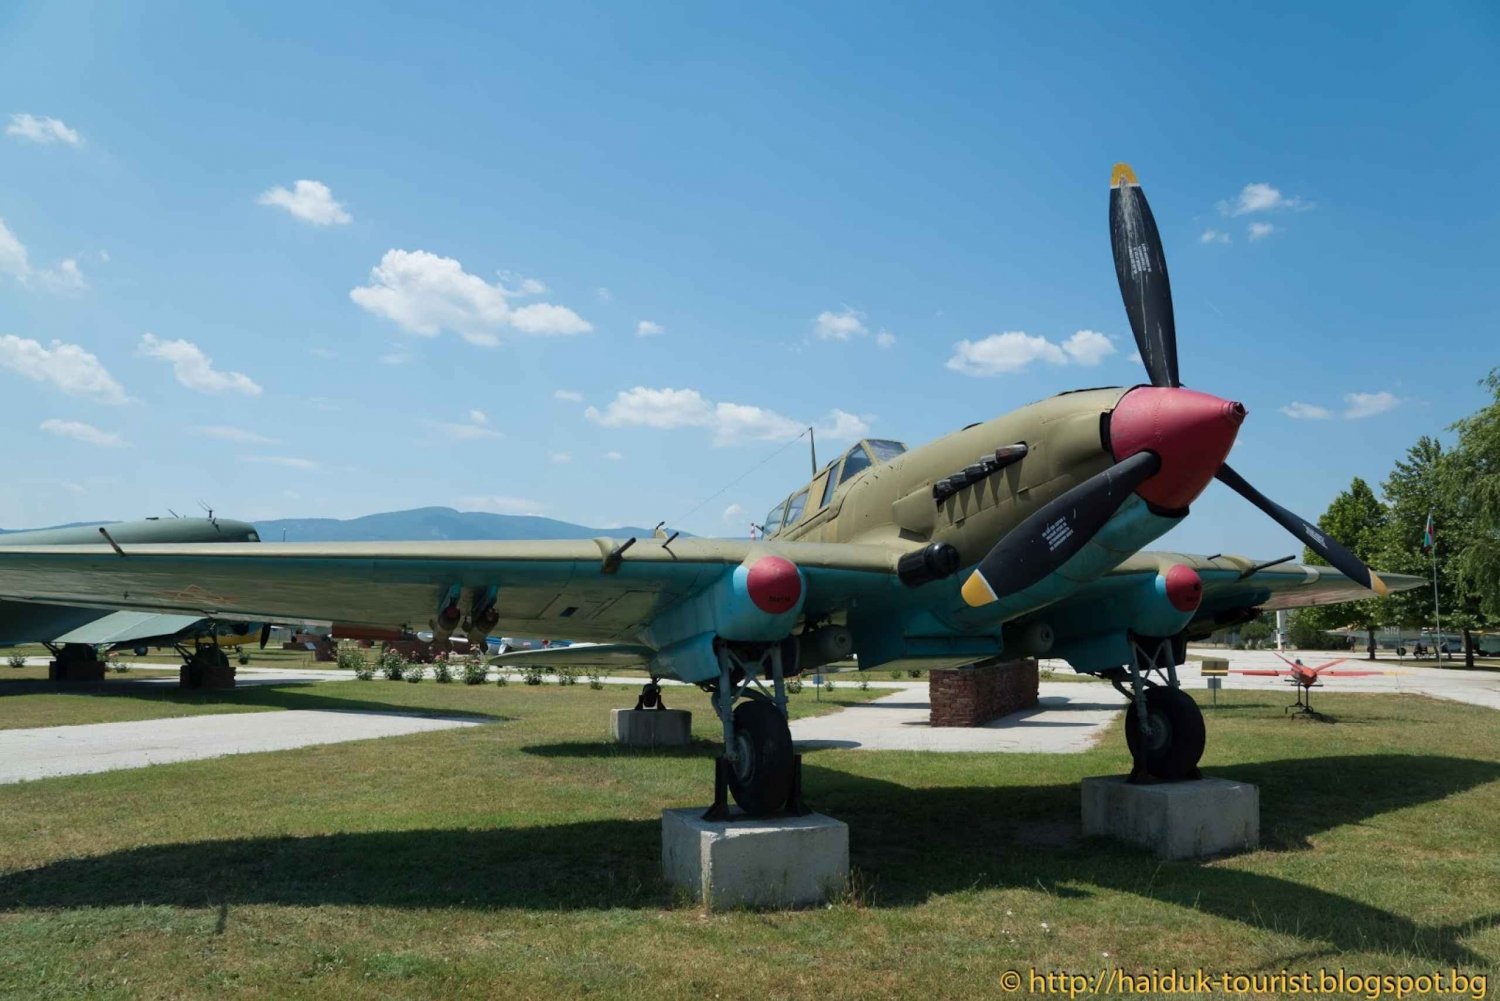 Plovdiv: Buzludzha Monument & Musuem of Aviation Day Trip